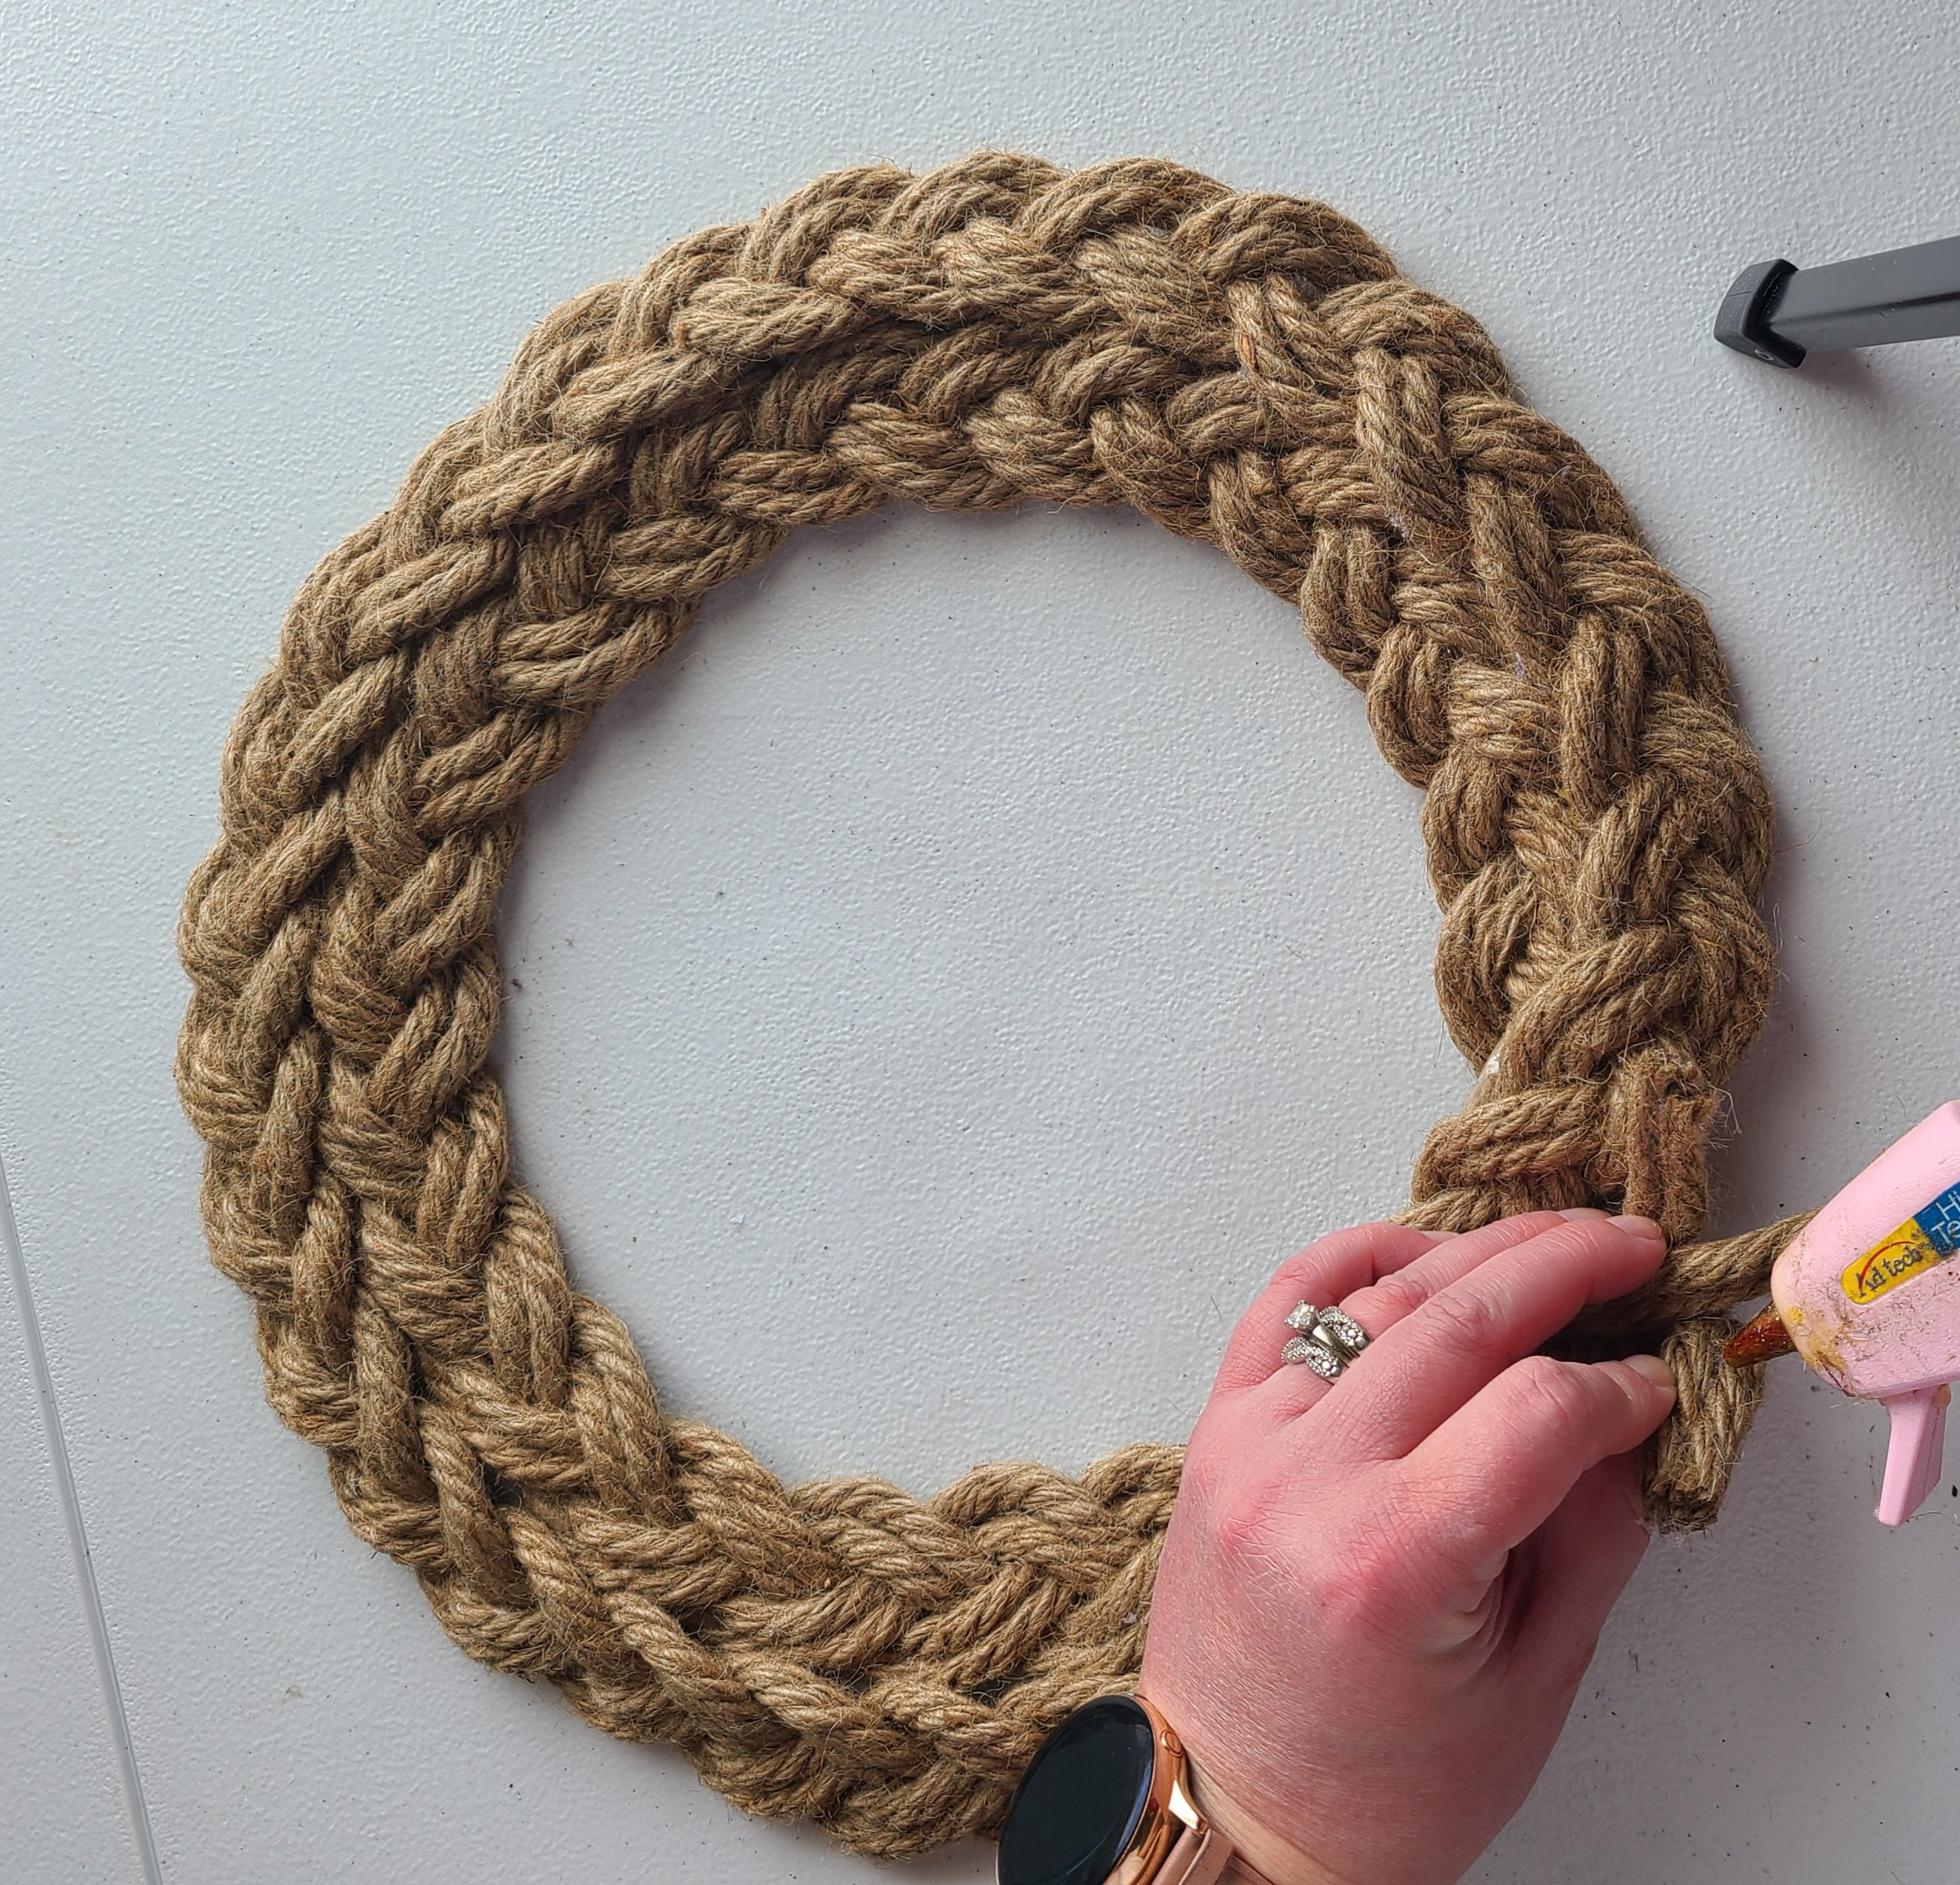 Nautical Rope Wreath Tutorial - Life as a LEO Wife